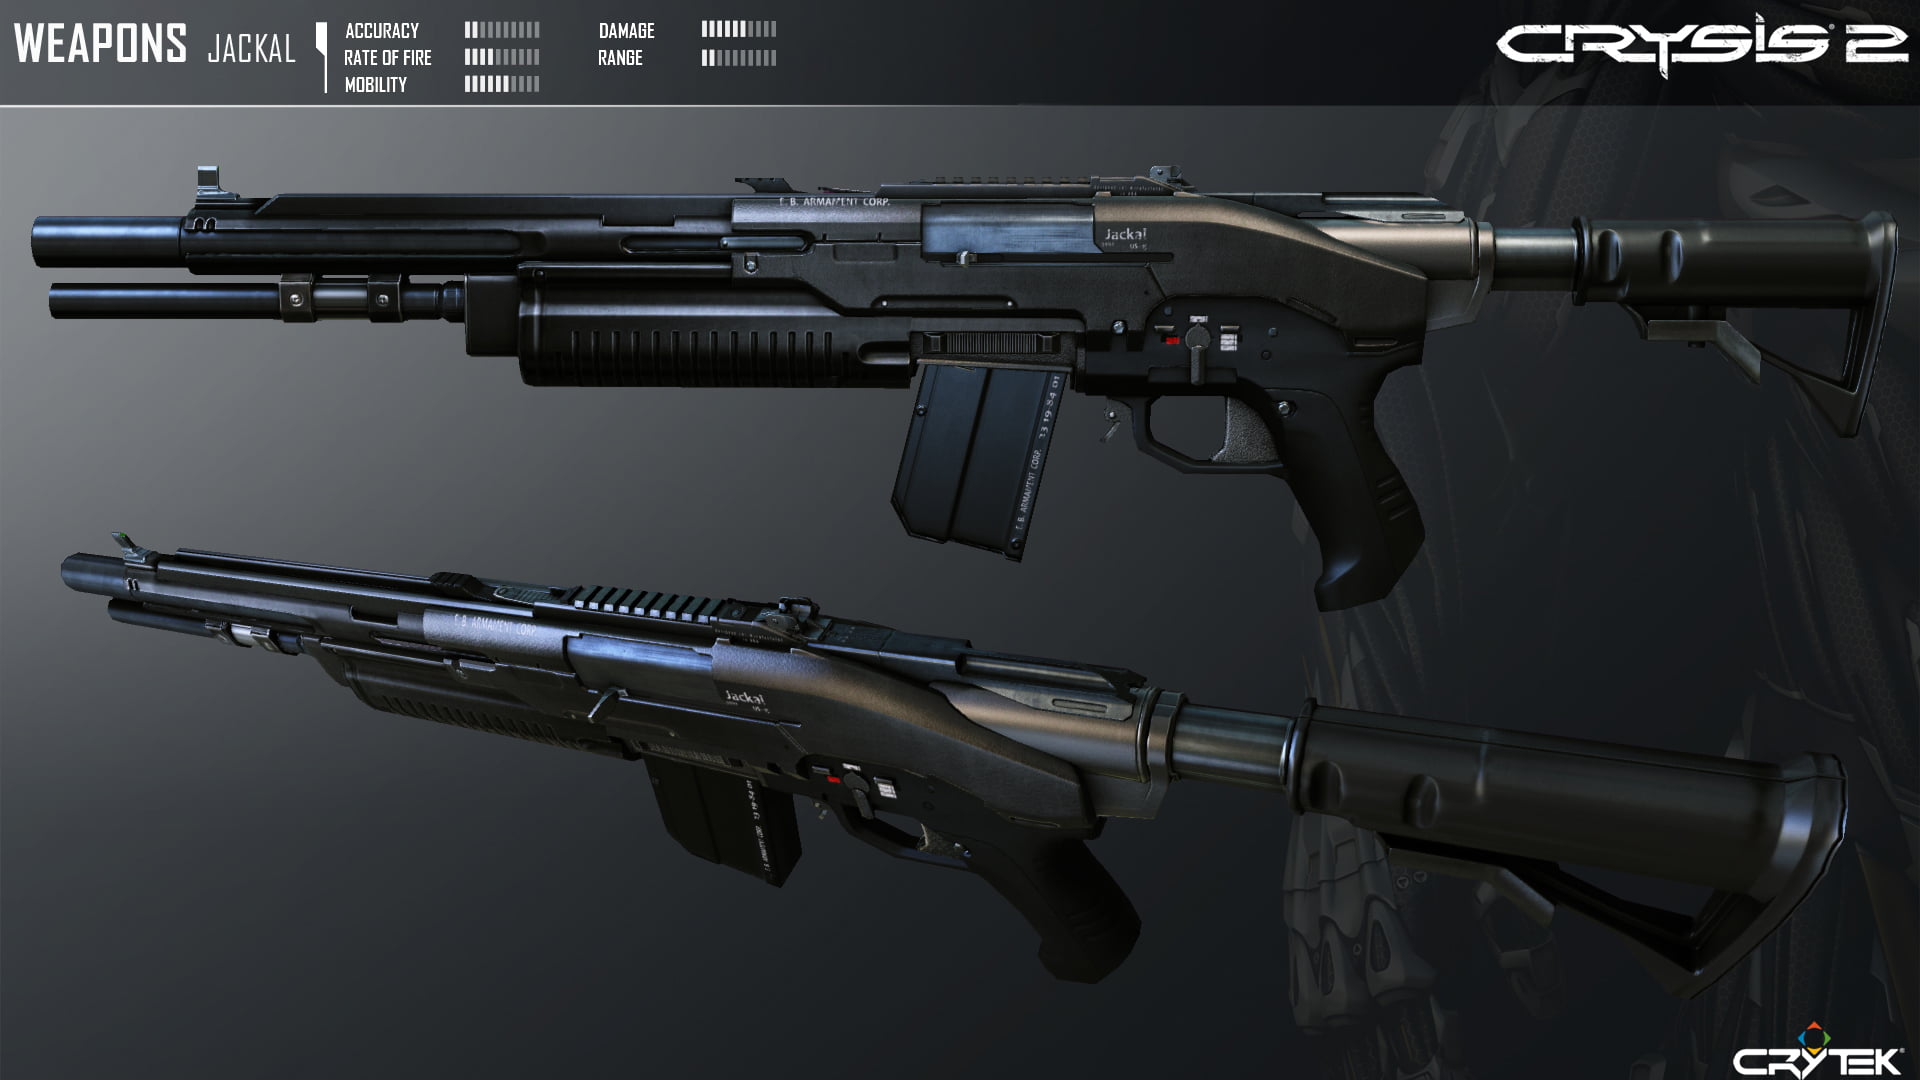 Crysis 2 Jackal weapon game application screenshot, video games